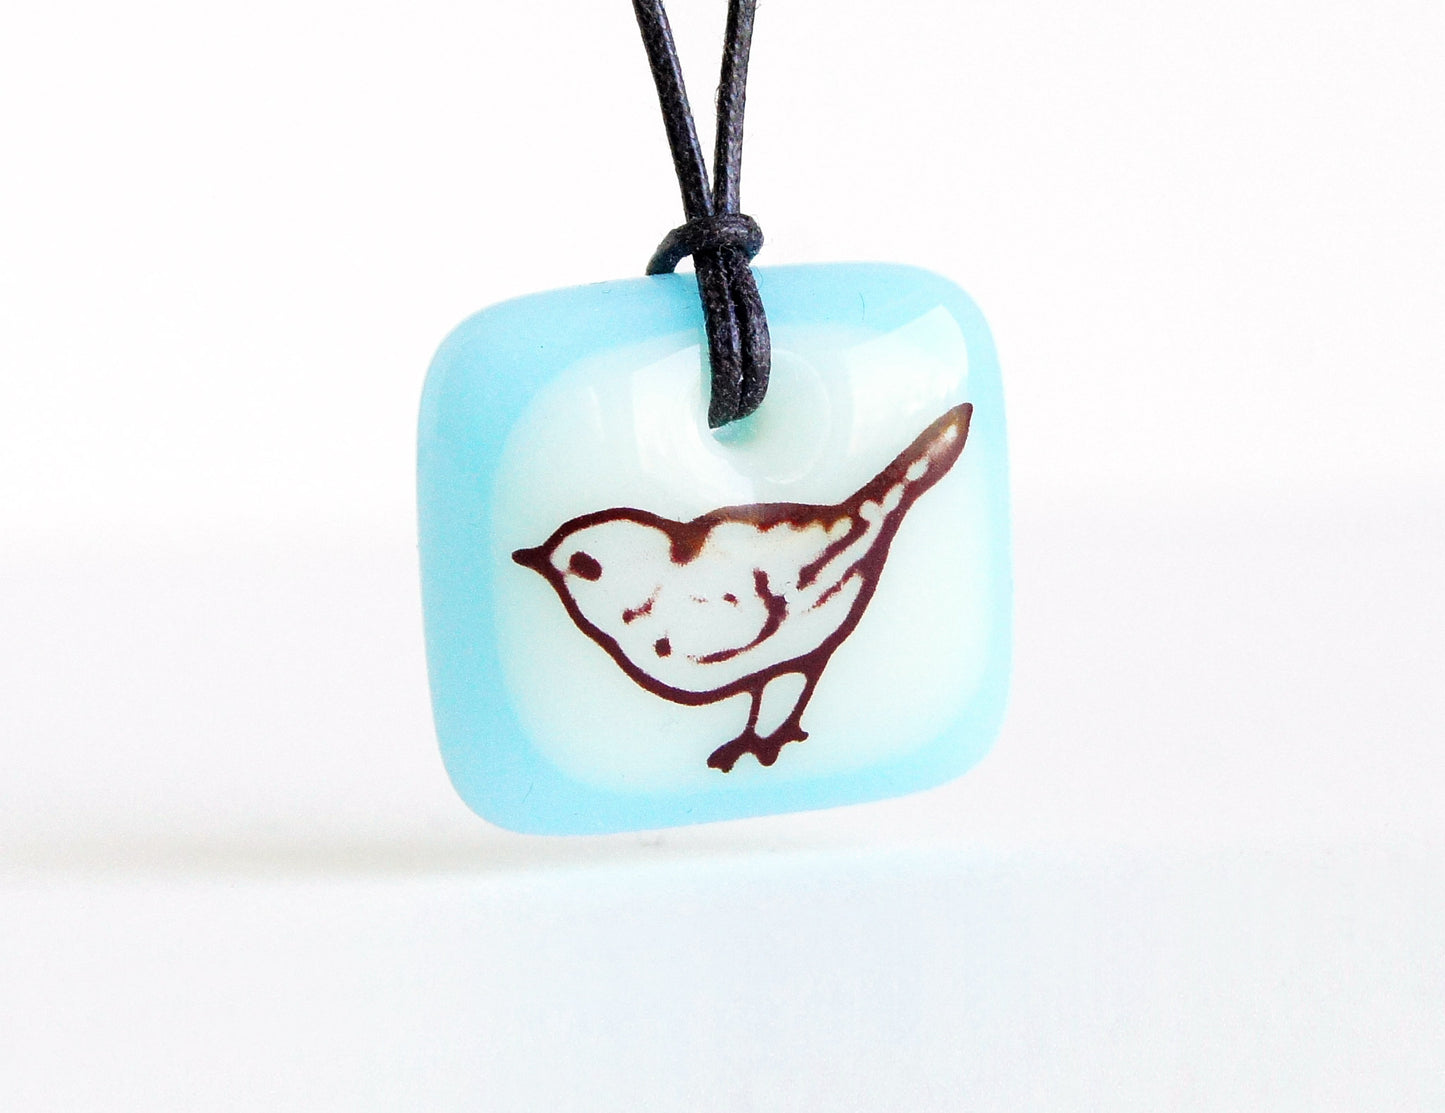 Little bird necklace in ice blue